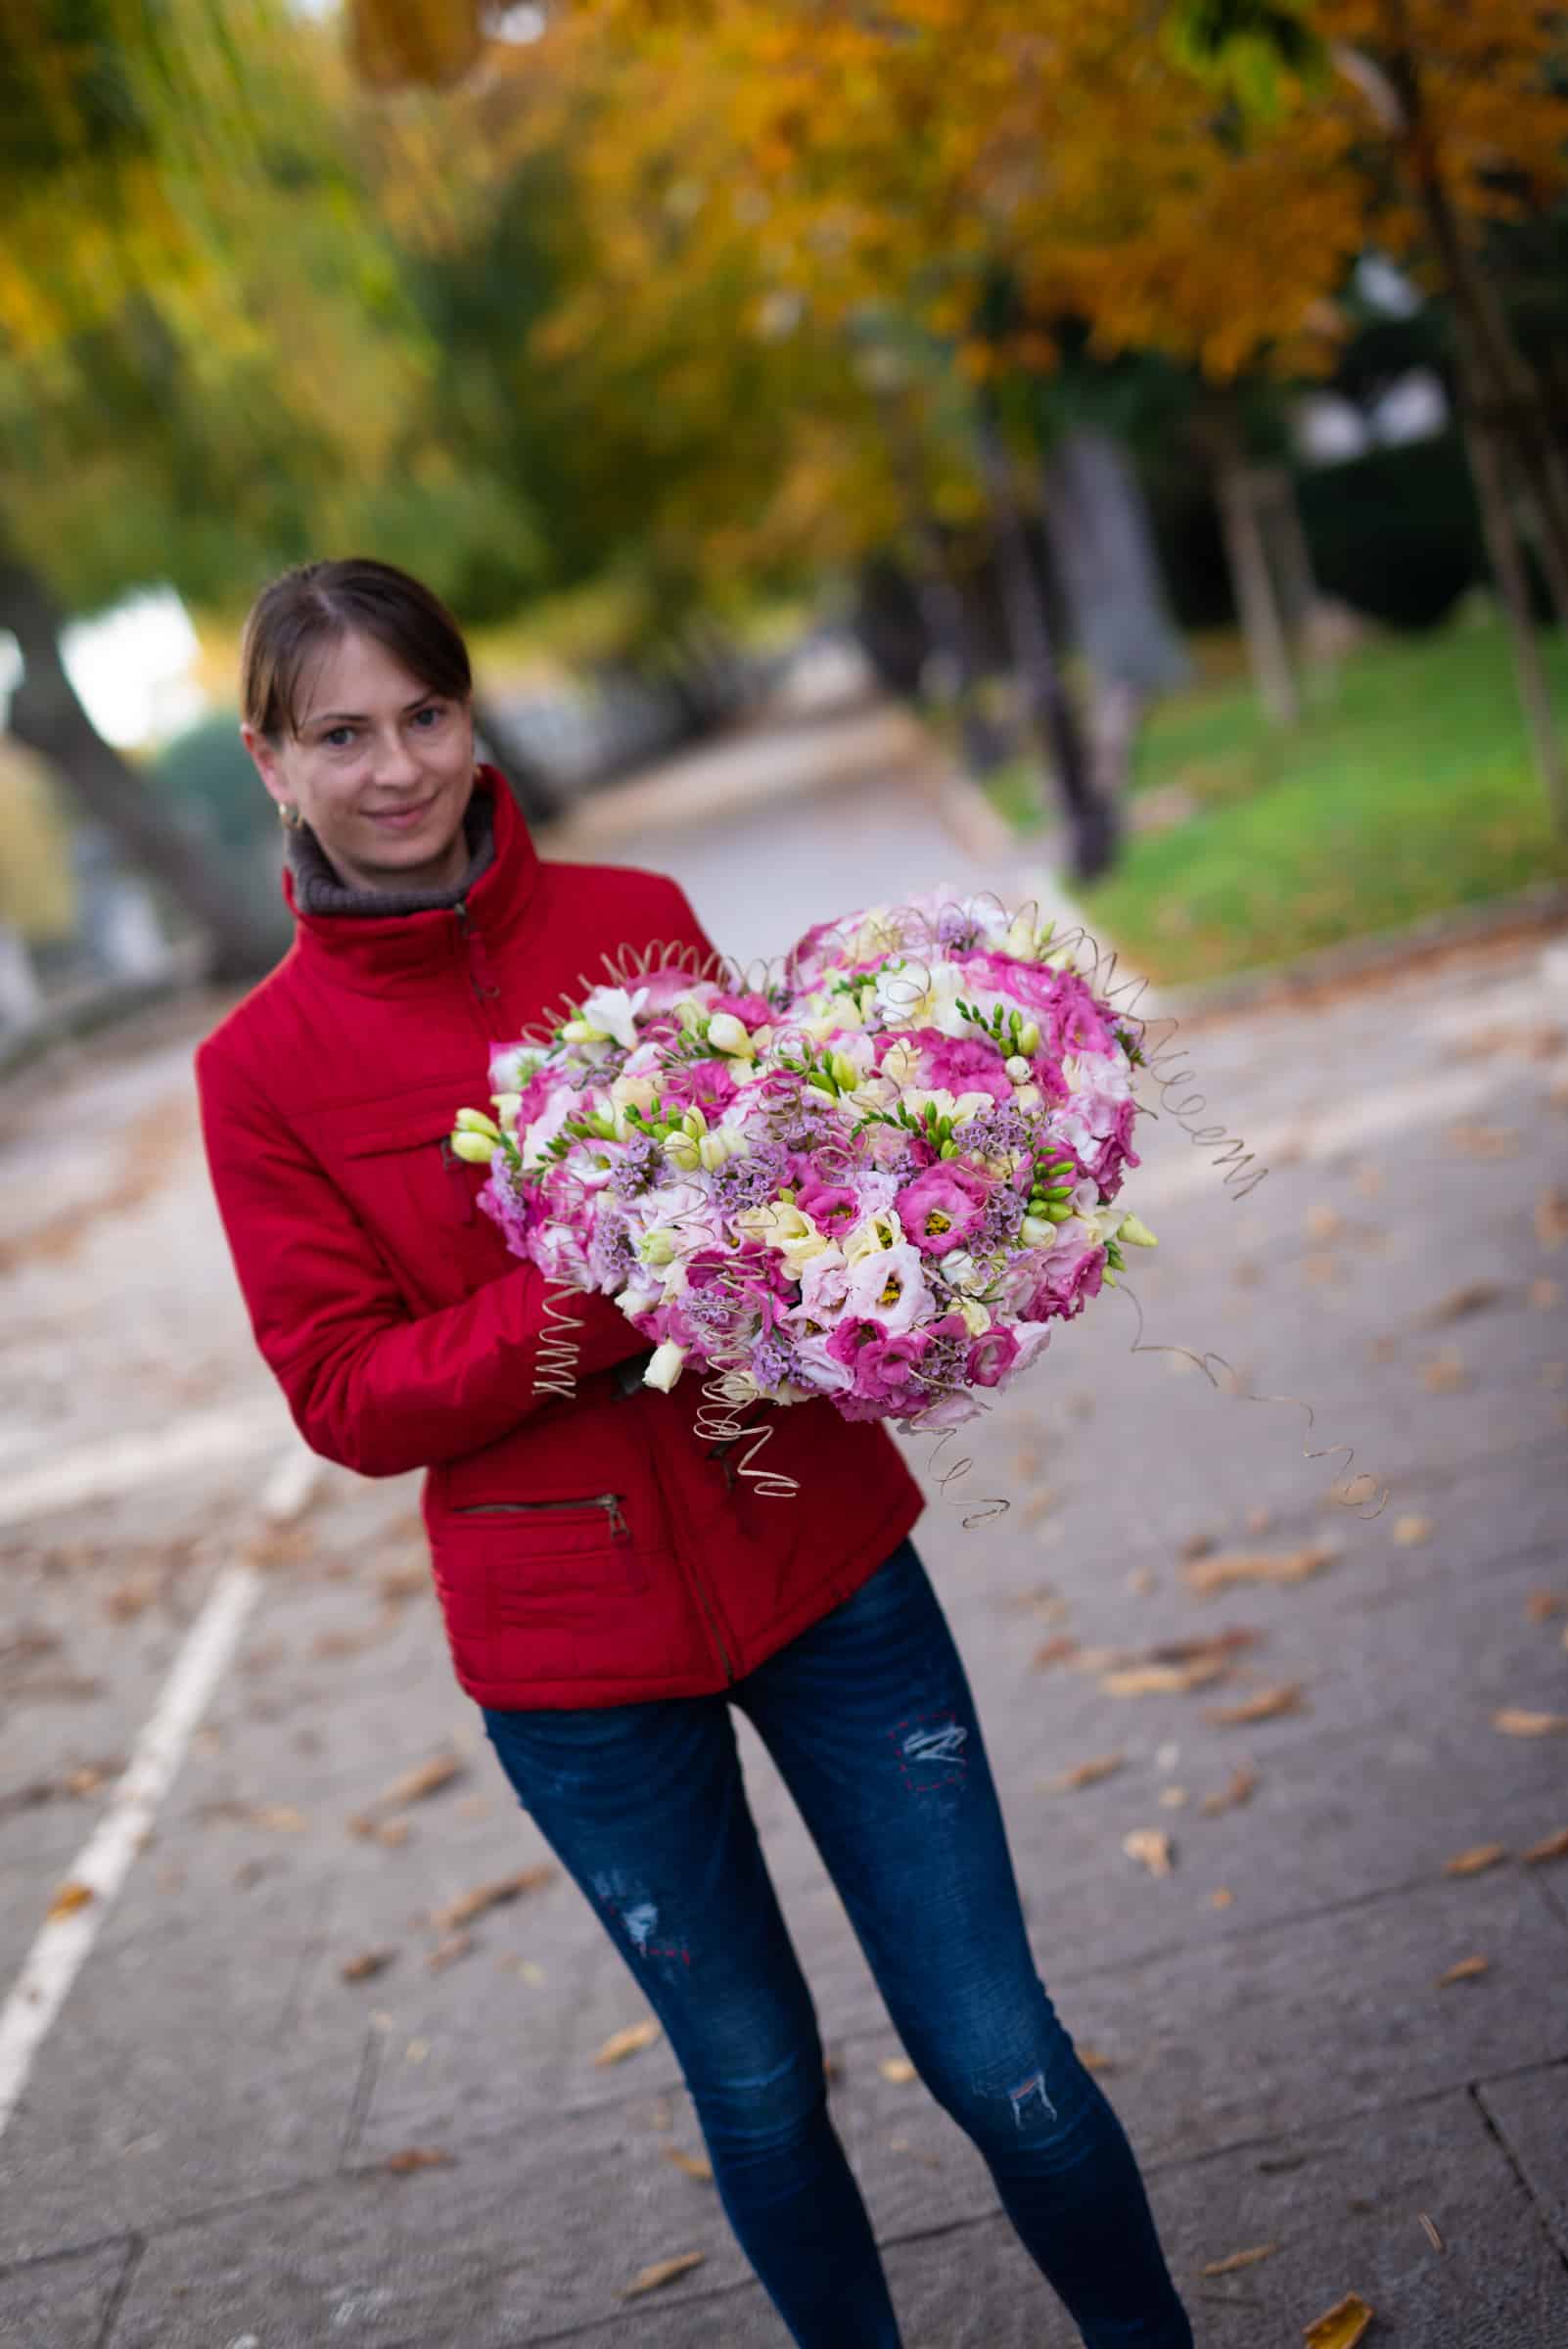 Lisianthus-Eustoma-Flower-White-Arrangement-Bouquet-Decoration-Pink-White-People-Mothers Day